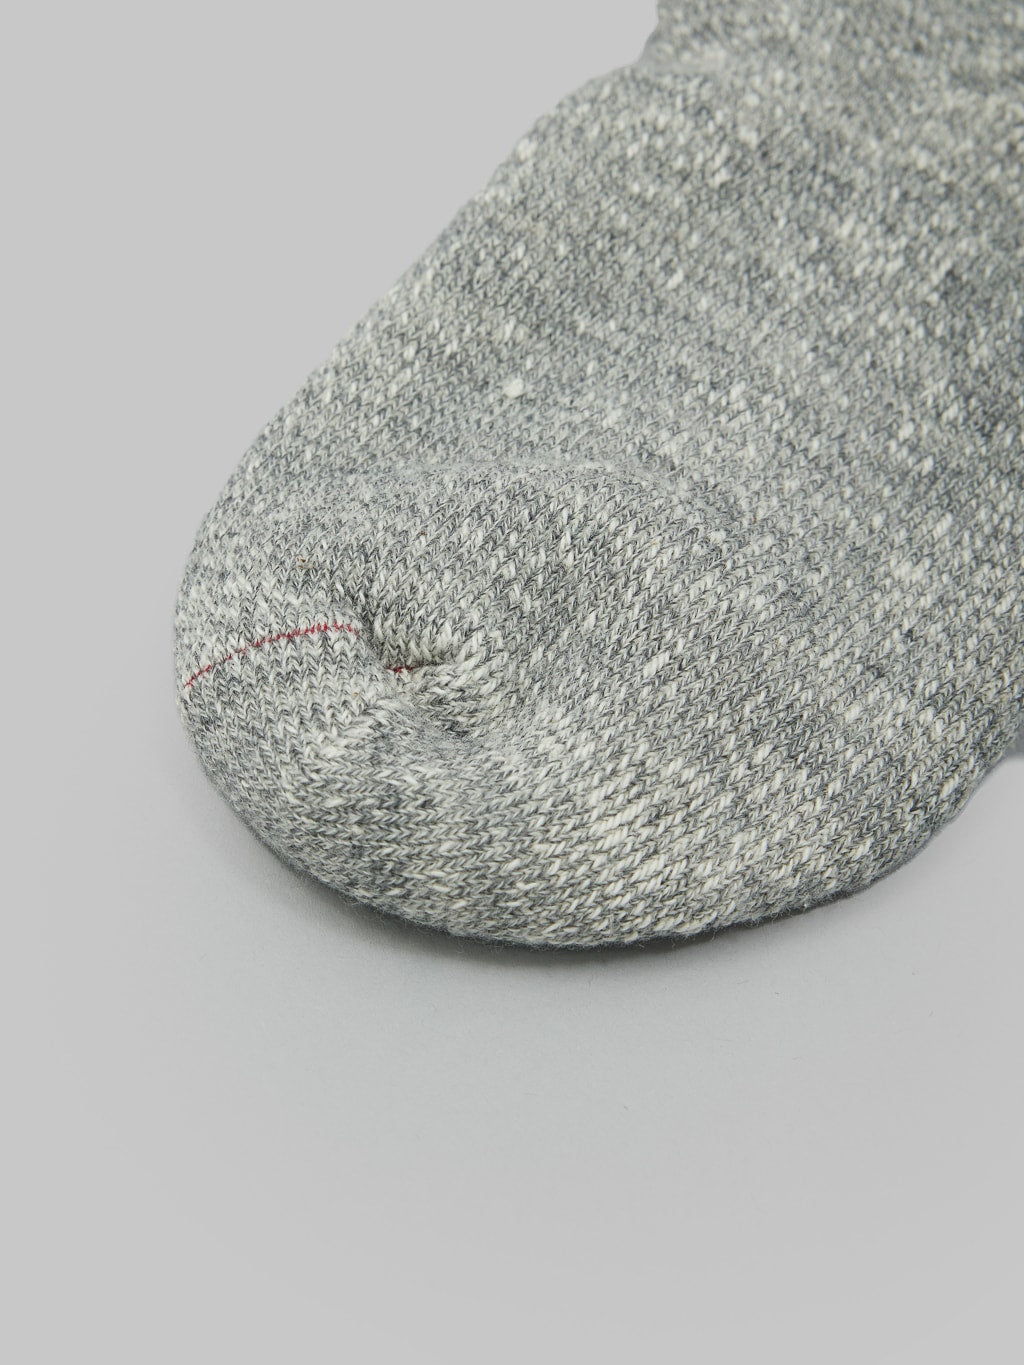 rototo double face crew socks cotton wool gray toe closeup